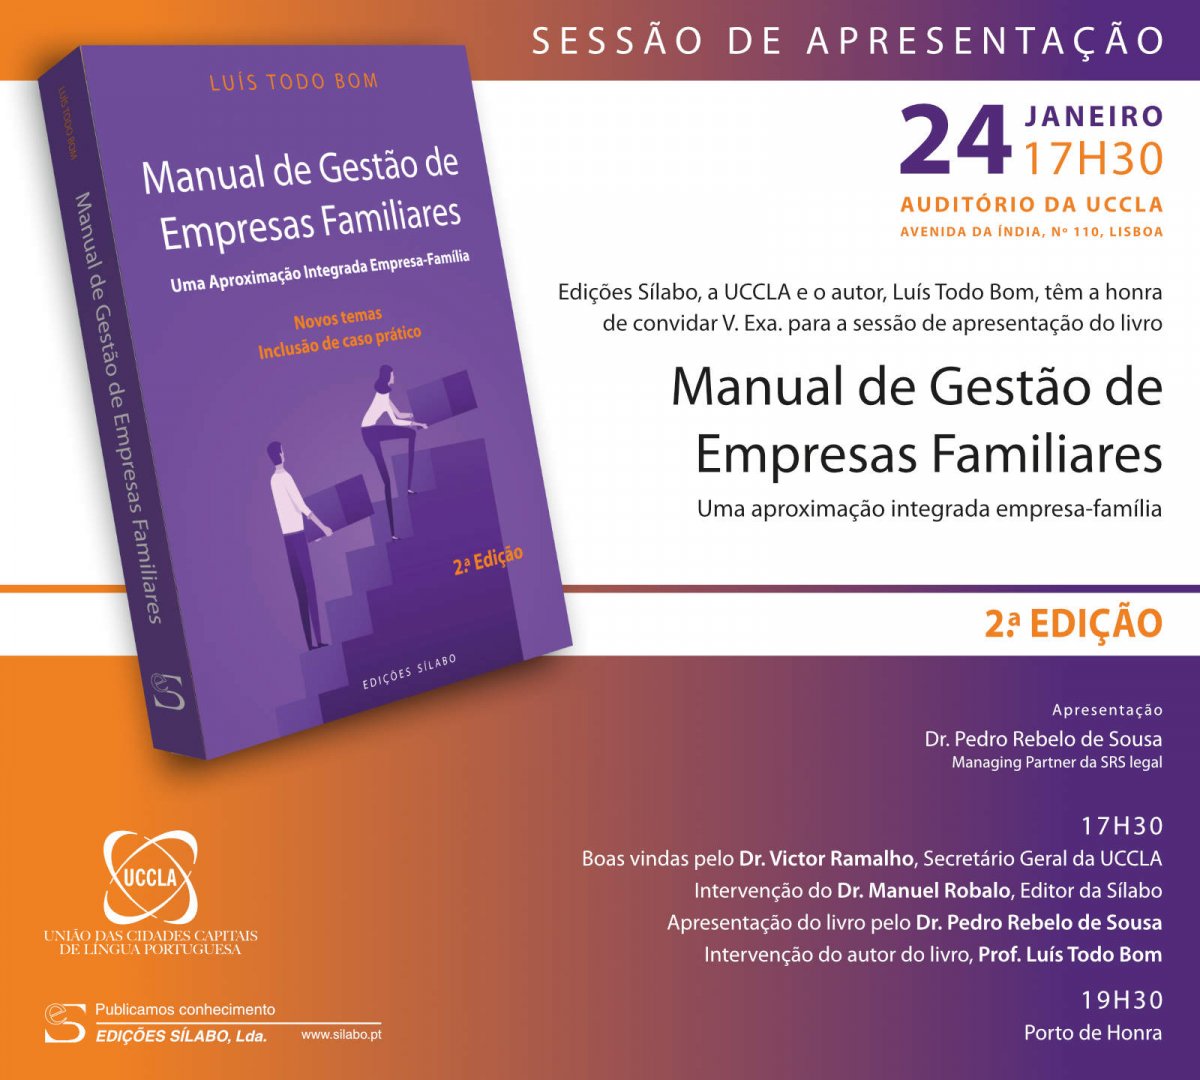 Manual de Gestão de Empresas Familiares_CONVITE_UCCLA